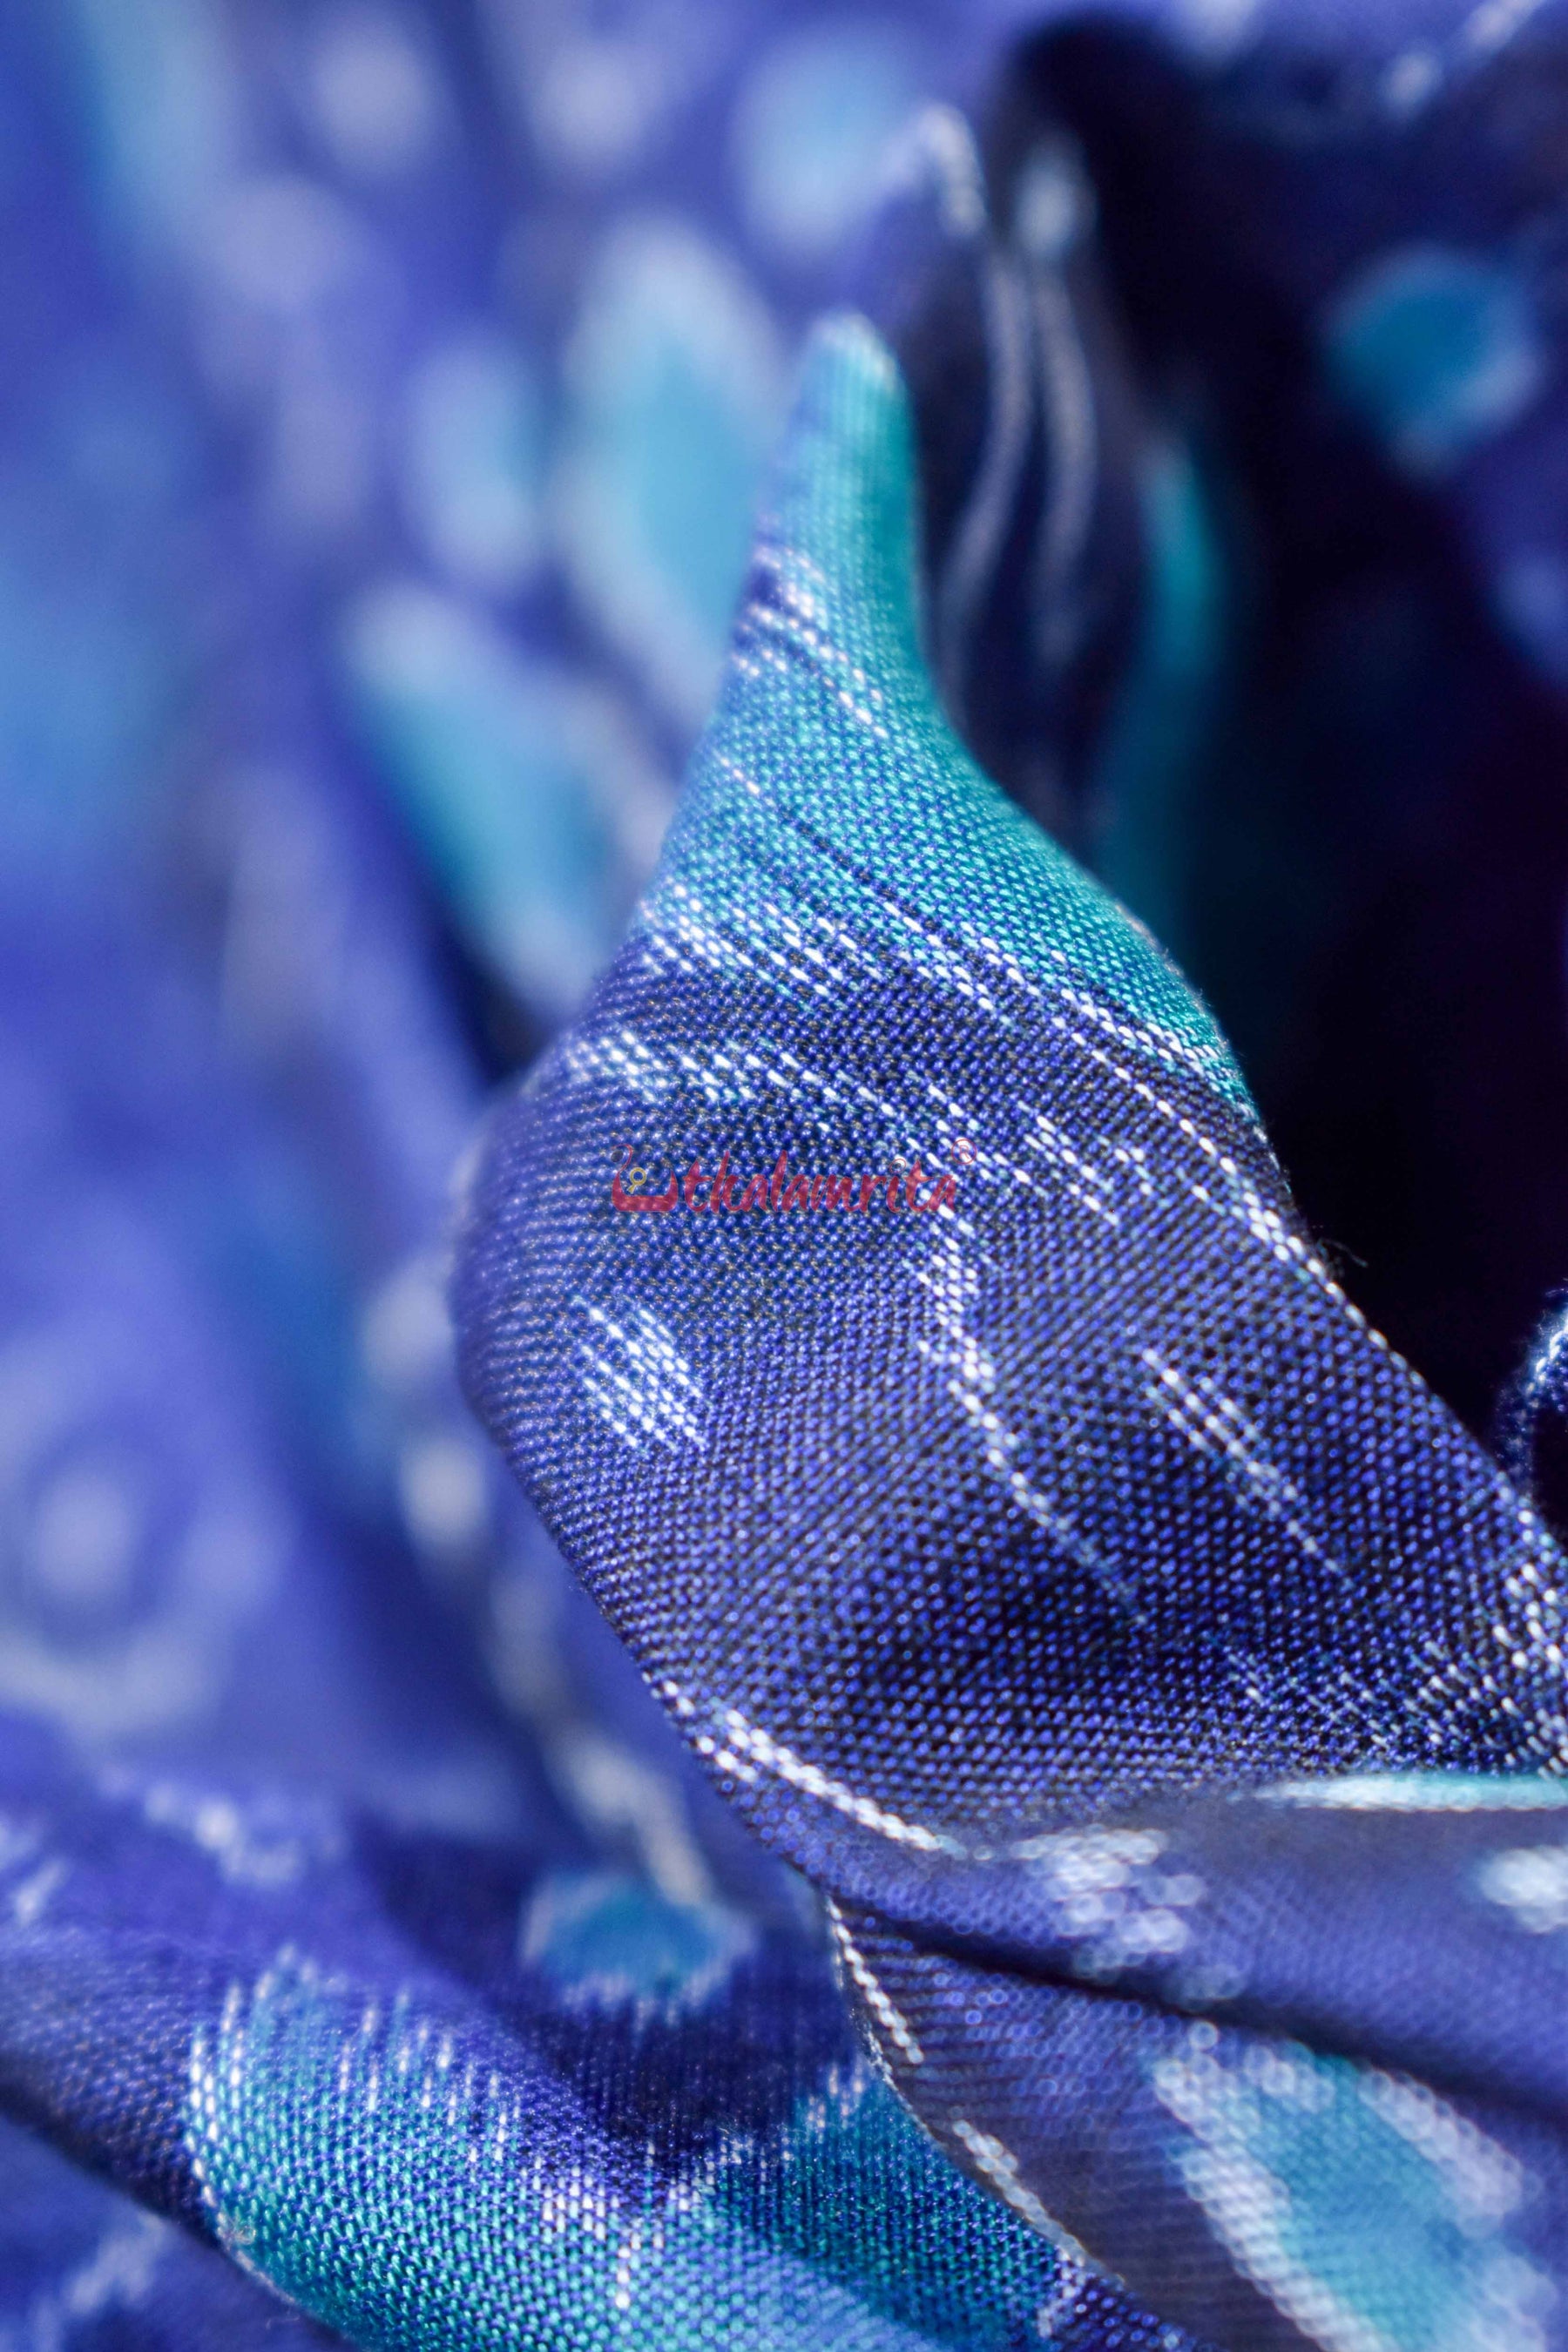 Deep Blue Hearts (Fabric)